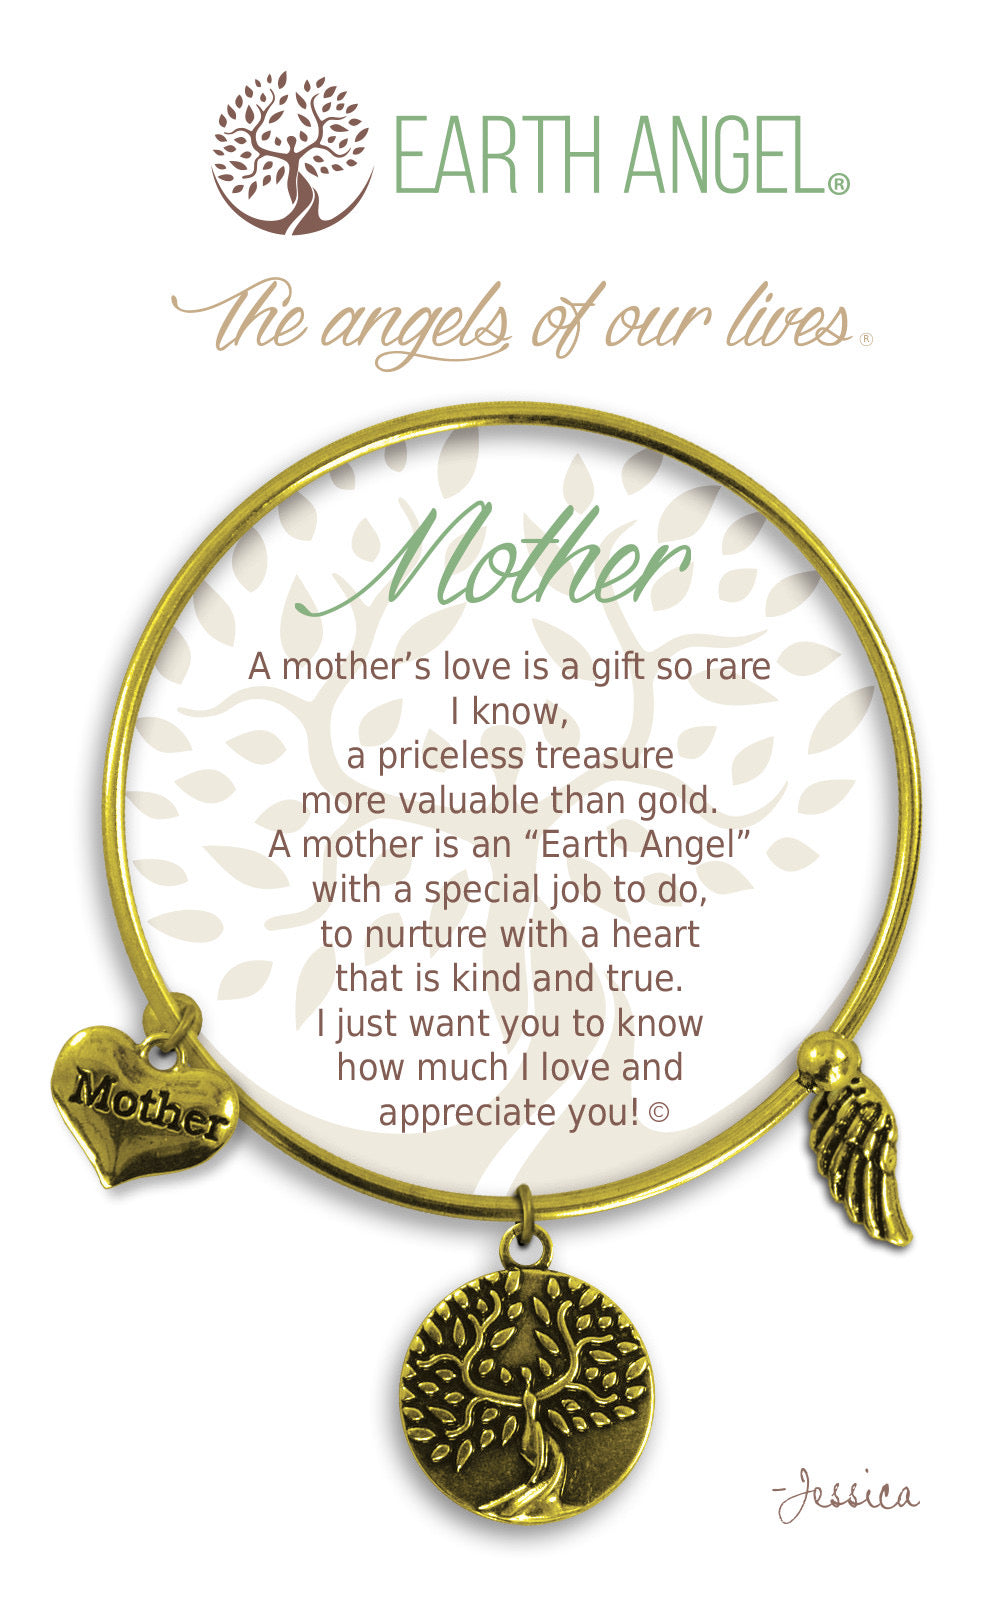 Earth Angel Bracelet - "Mother"